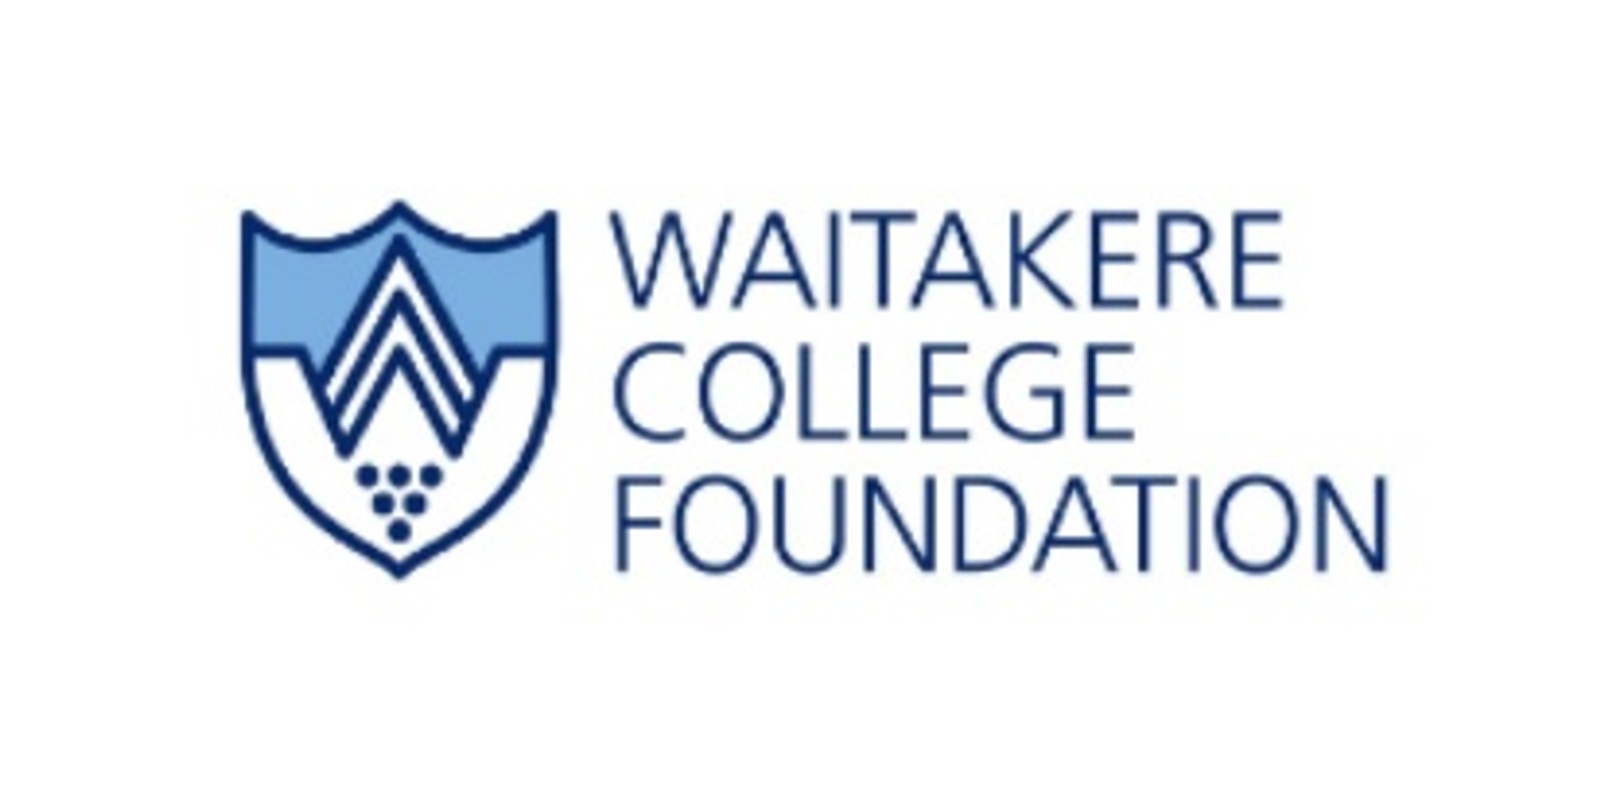 Waitākere College Foundation's banner